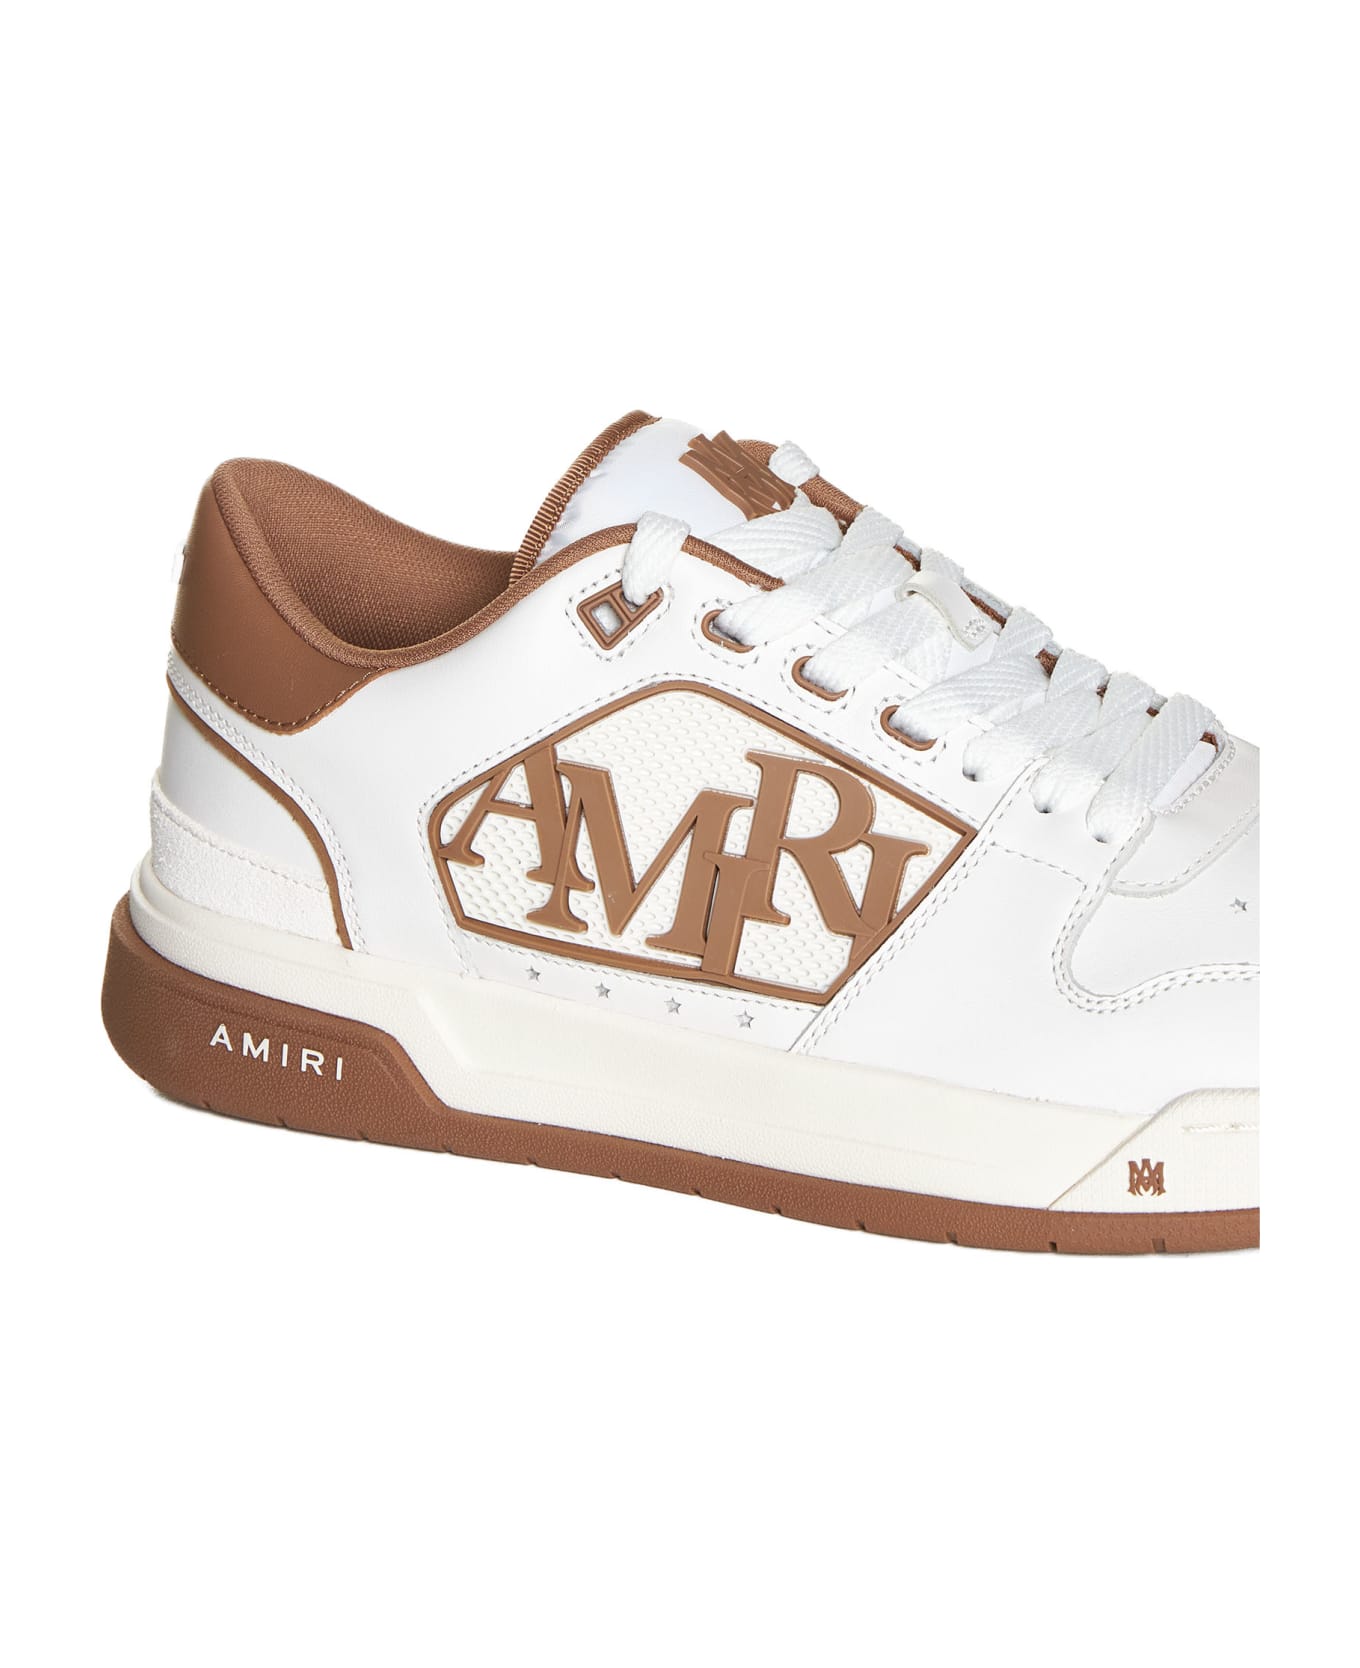 AMIRI Sneakers - White brown